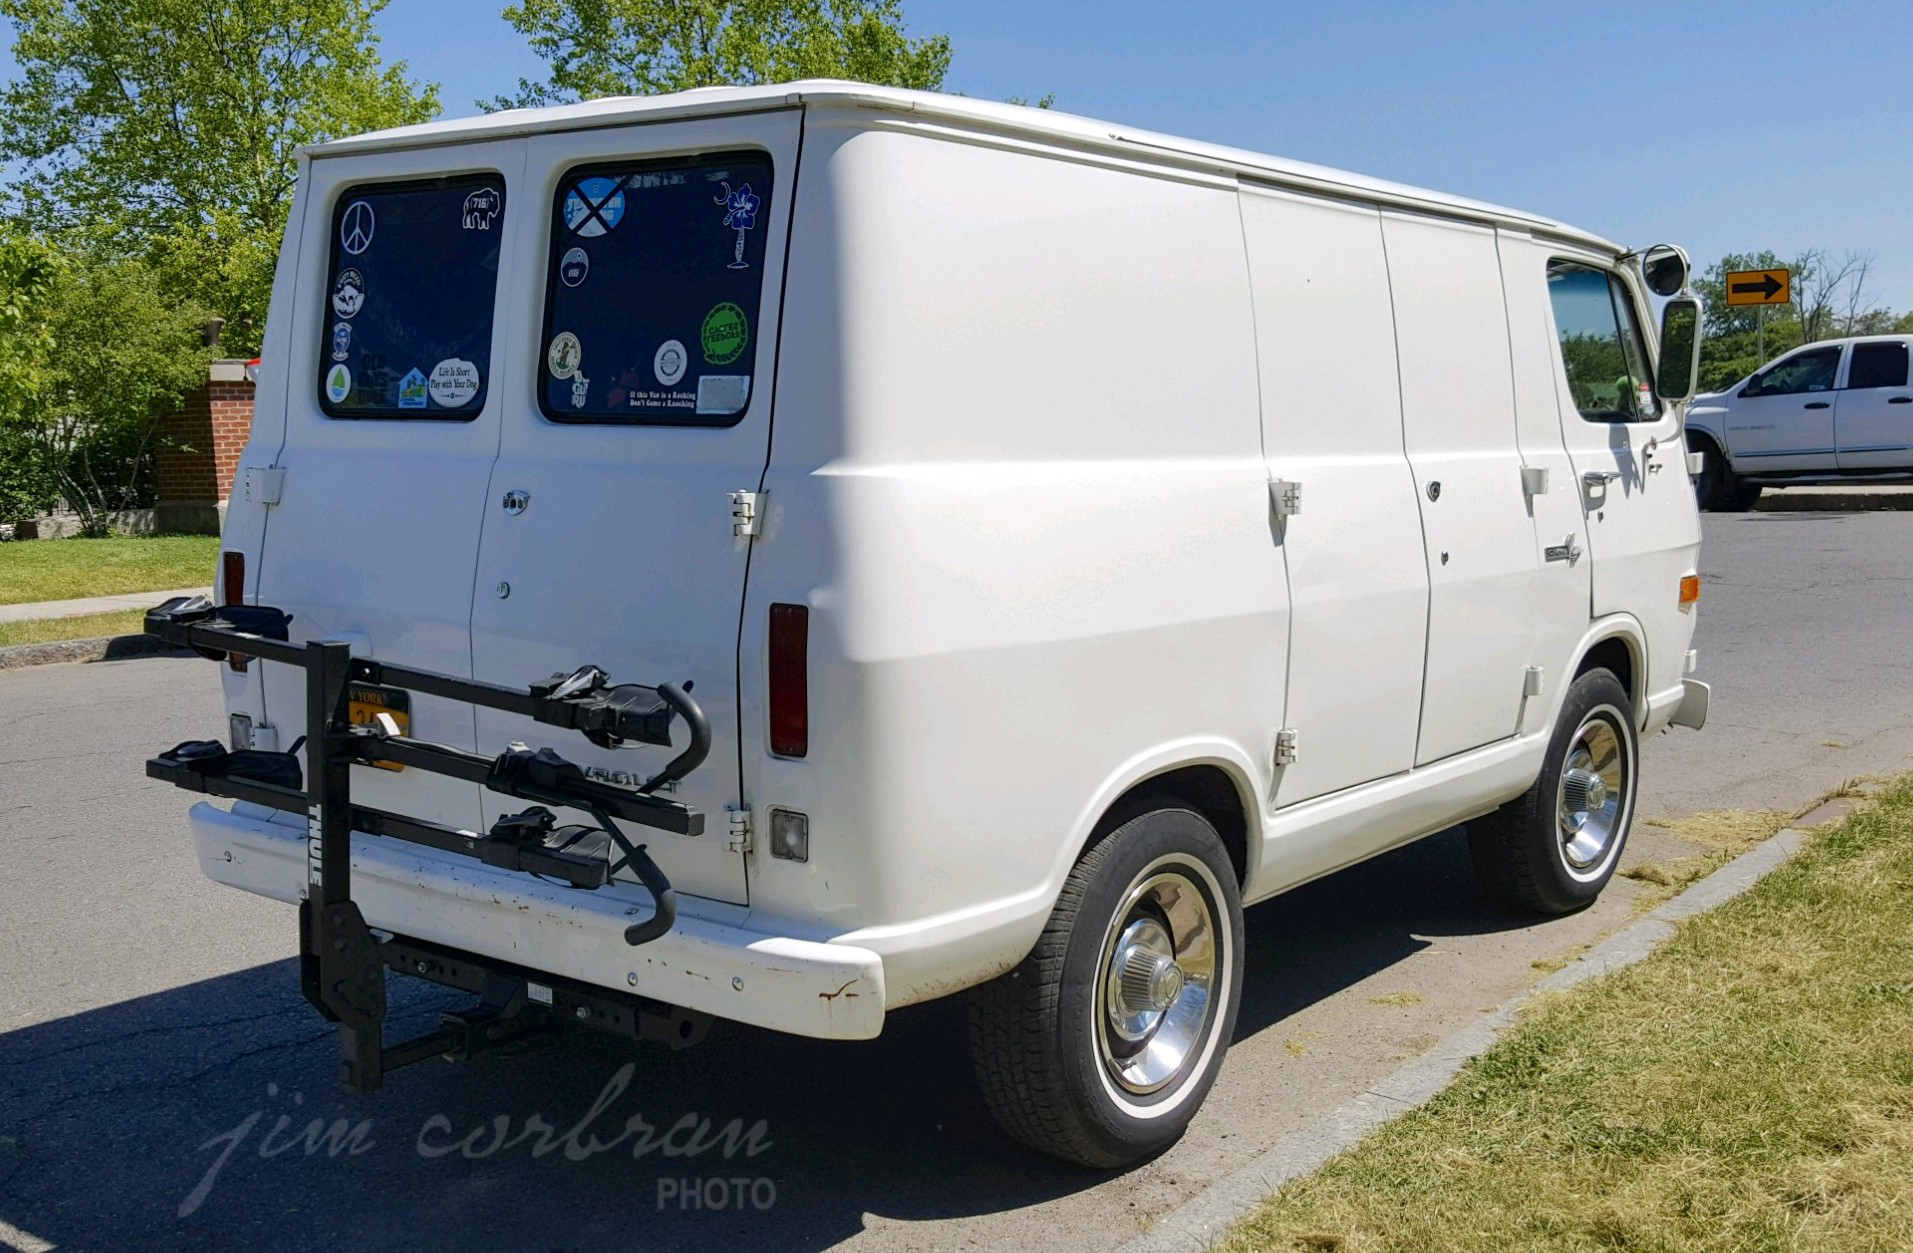 1968 chevy van for sale